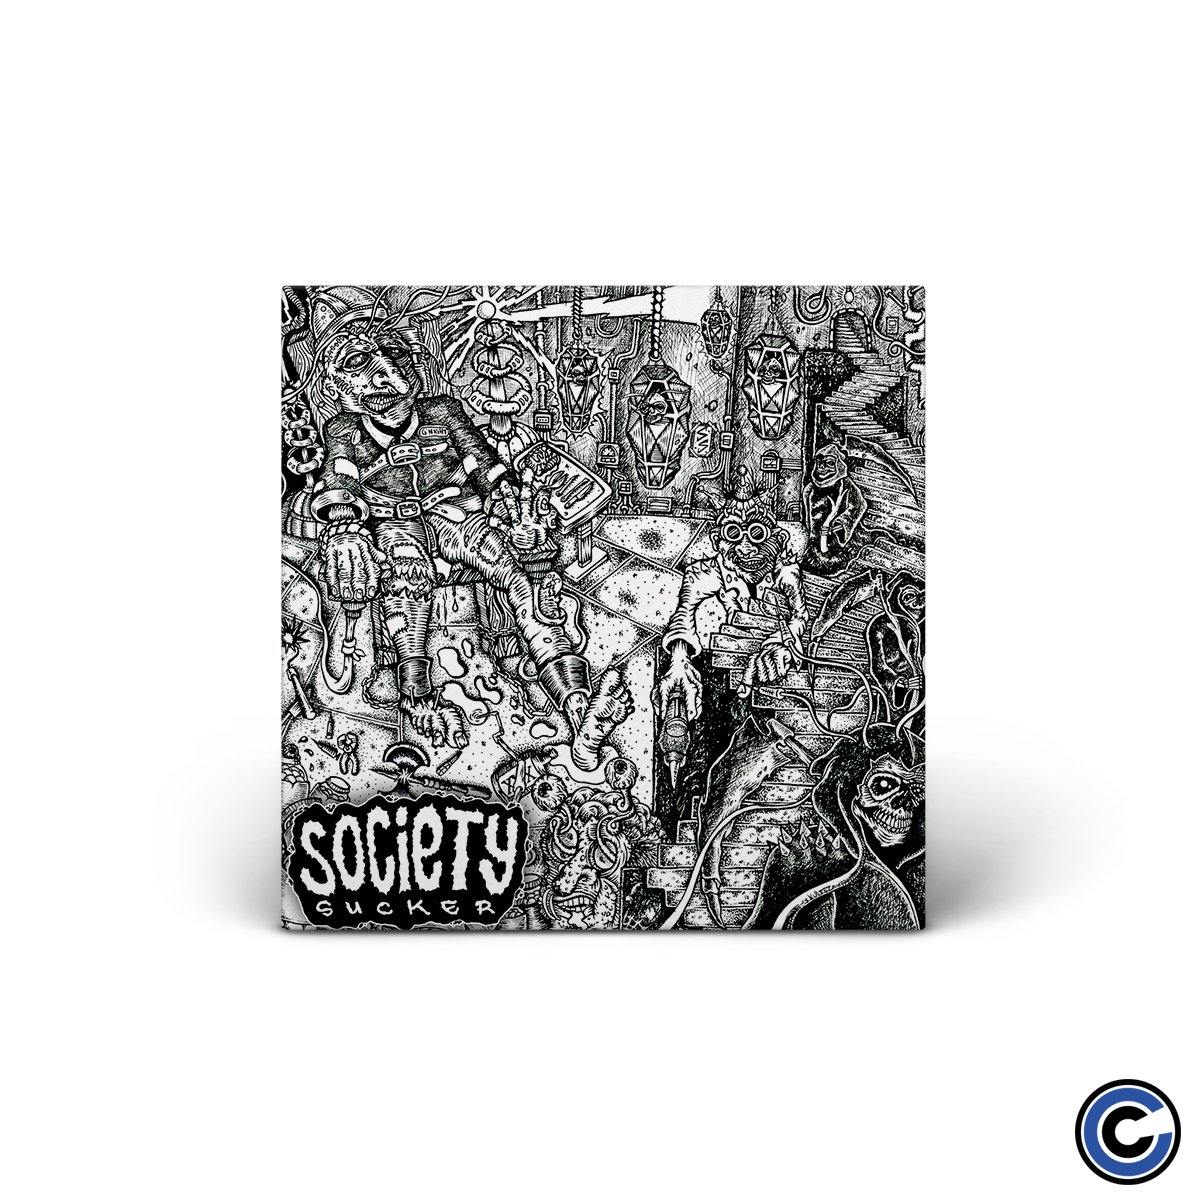 Buy – Society Sucker "Society Sucker" 7" – Band & Music Merch – Cold Cuts Merch